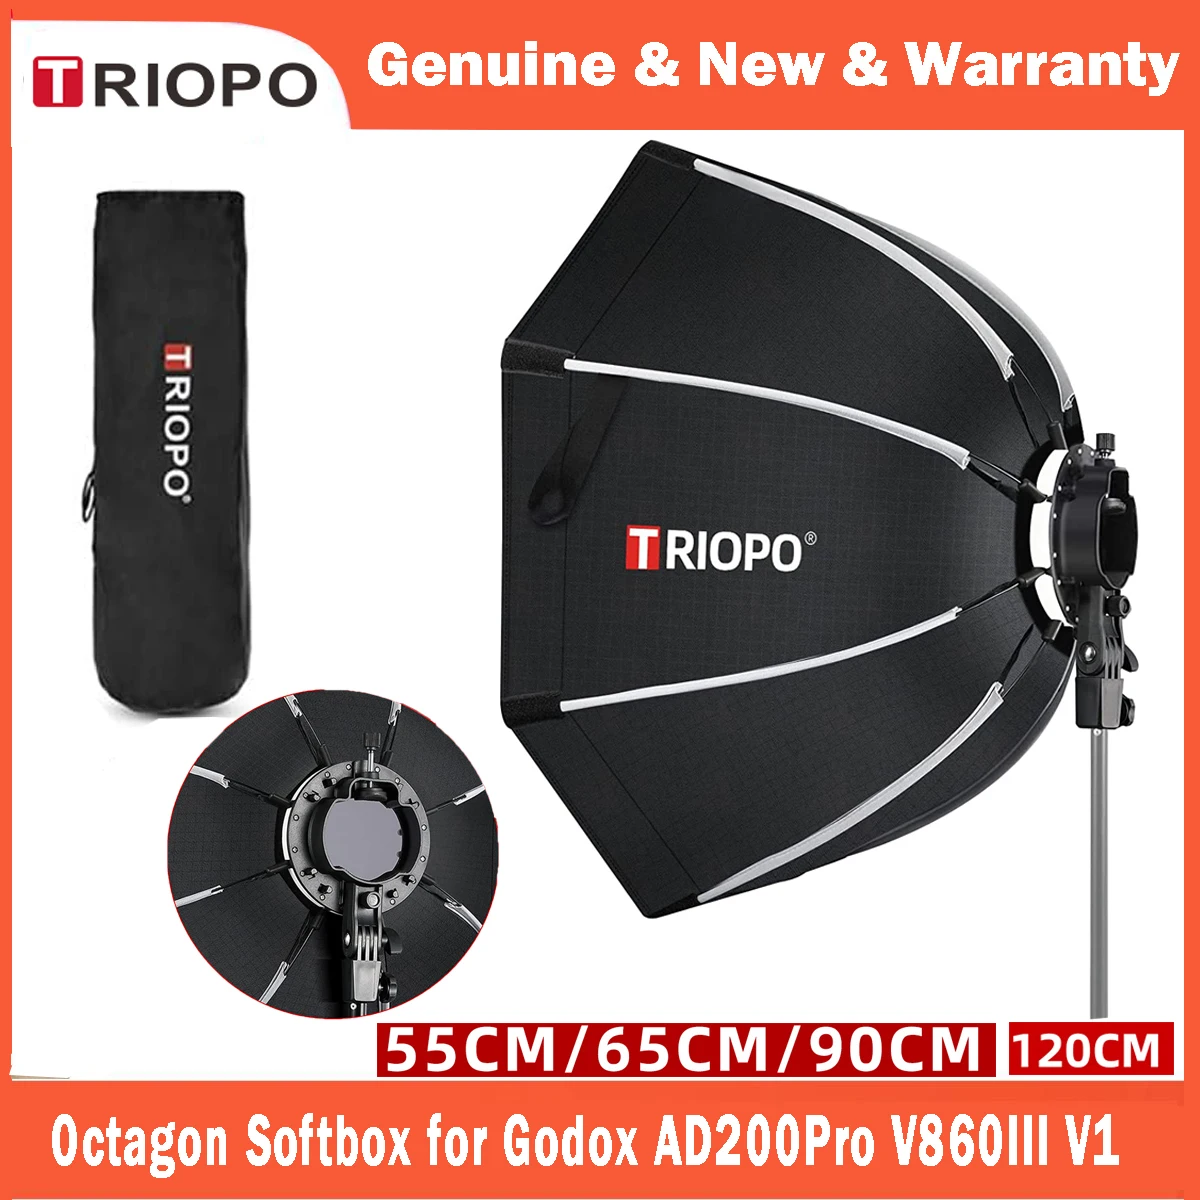 TRIOPO 55cm 65cm 90cm 120cm Foldable Octagon Softbox Tripod Grip for Godox V860III V1 AD200Pro Yongnuo Speedlite Flash Light